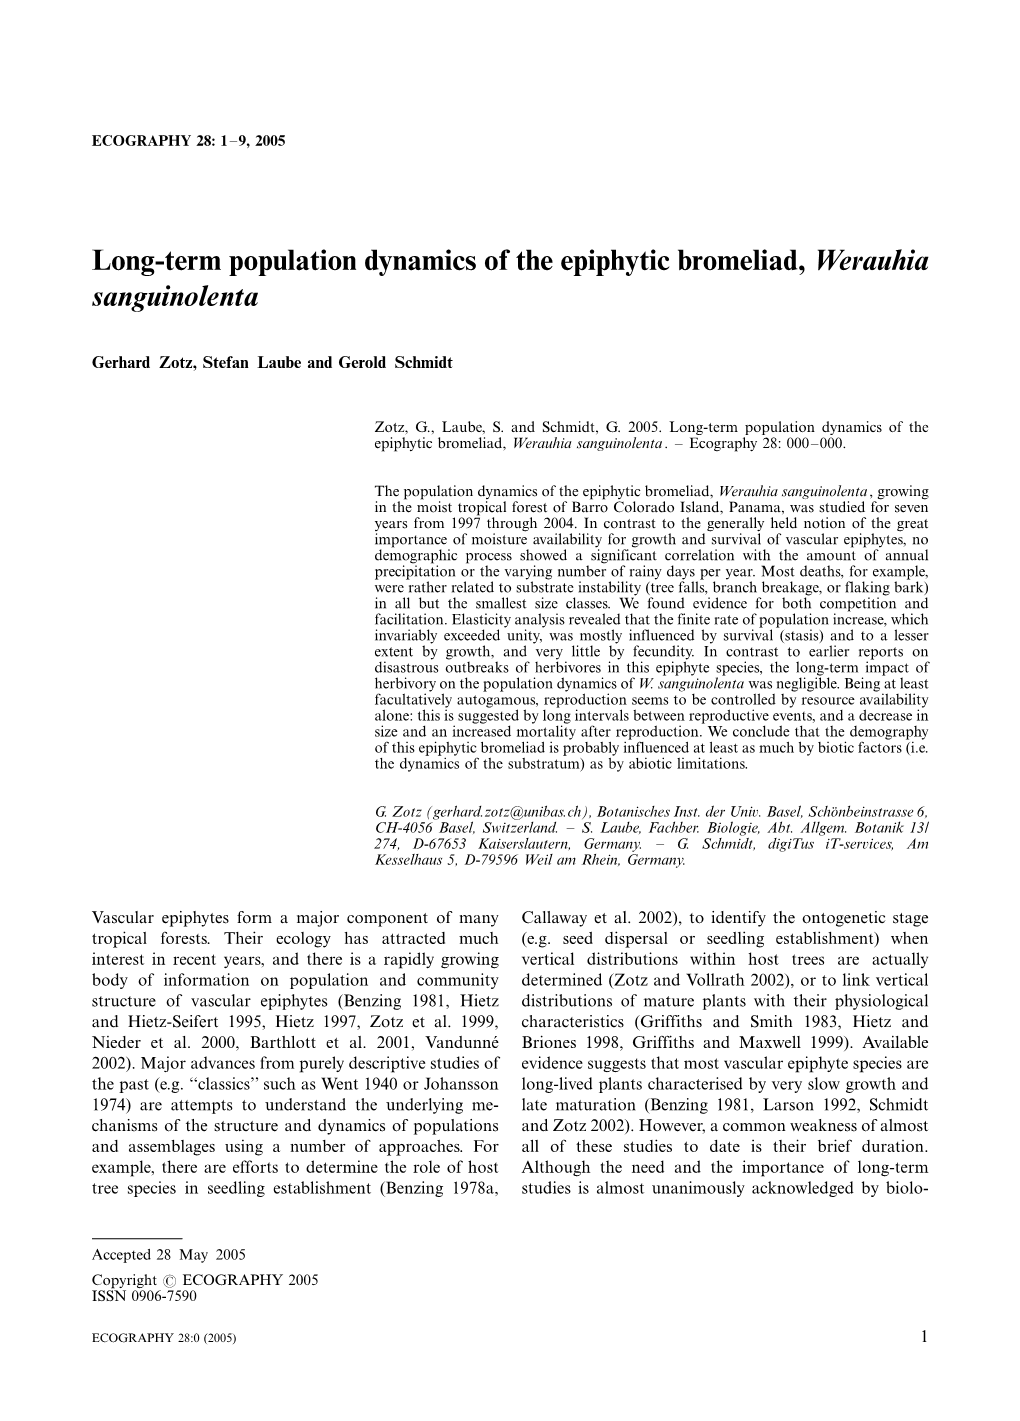 Long-Term Population Dynamics of the Epiphytic Bromeliad, Werauhia Sanguinolenta